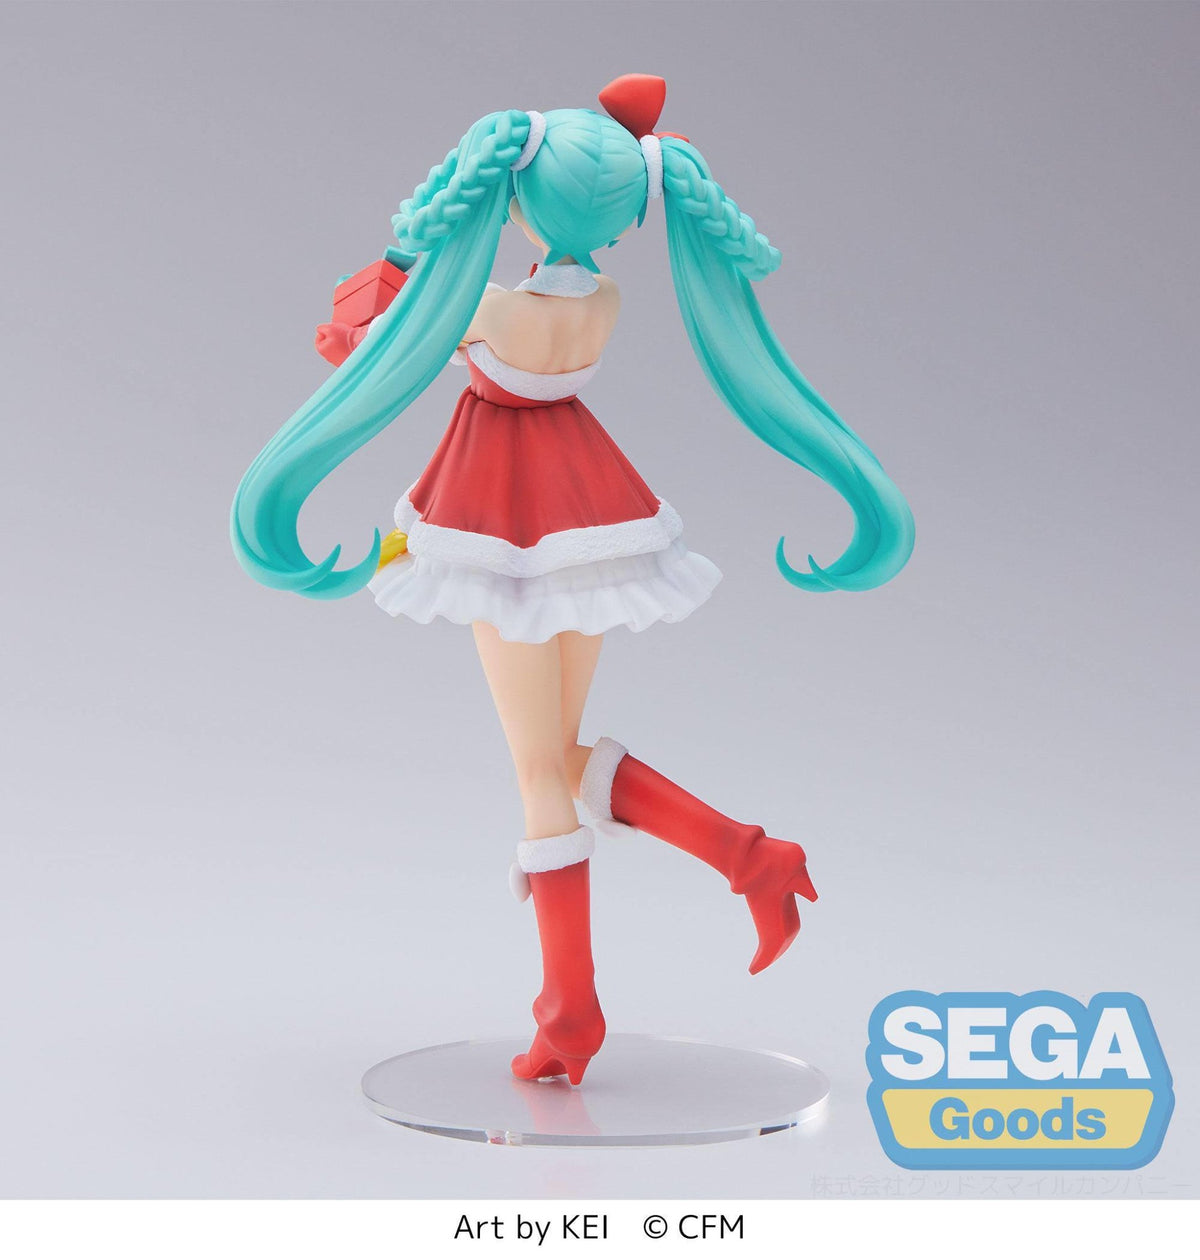 Hatsune Miku - Christmas 2022 - SPM figure (Sega)